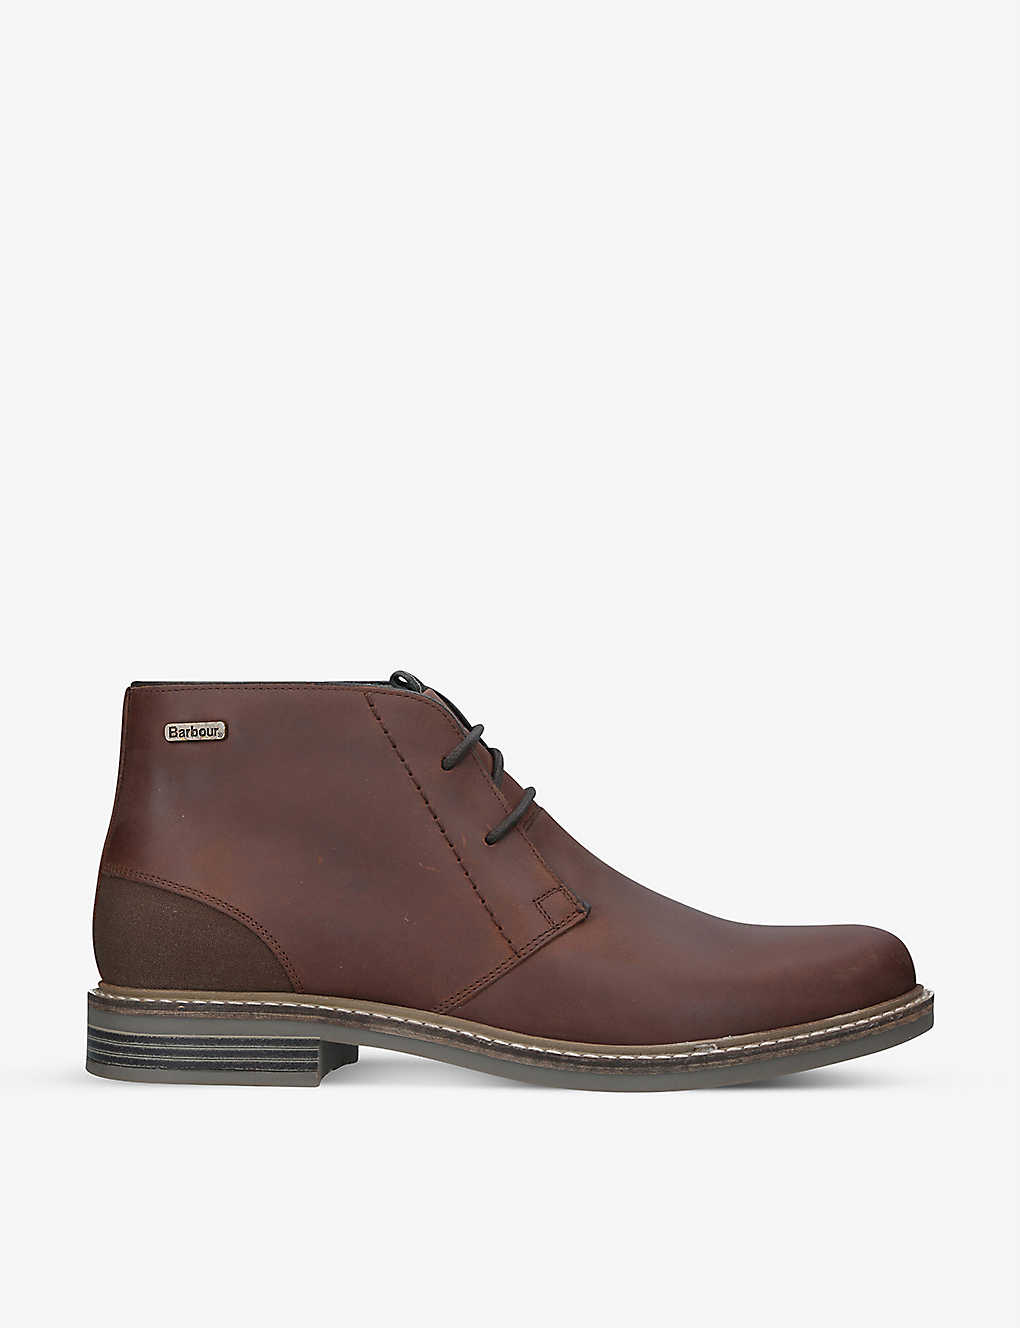 Readhead leather chukka boots(9249295)